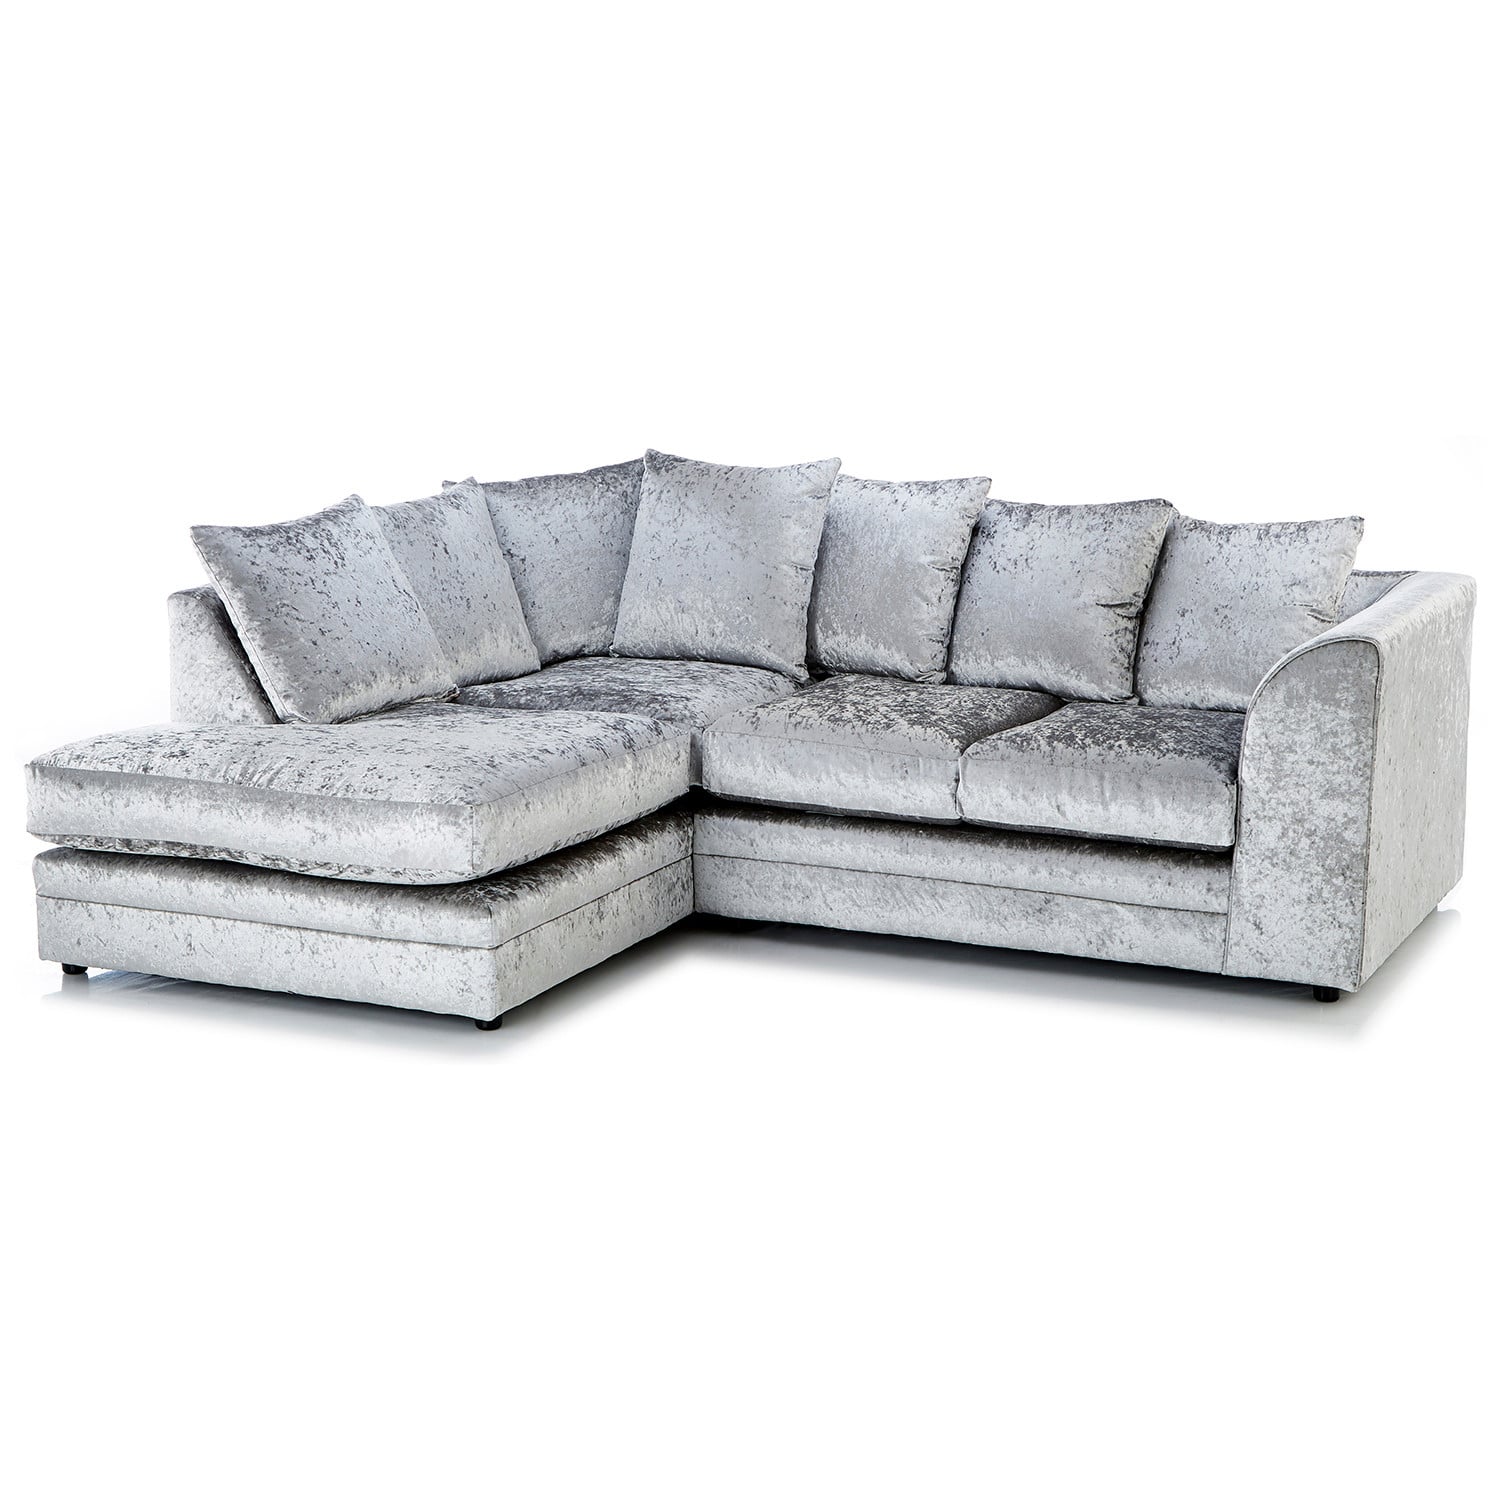 Crushed Velvet Furniture Sofas Beds, Grey Velvet Sofa Bed Uk